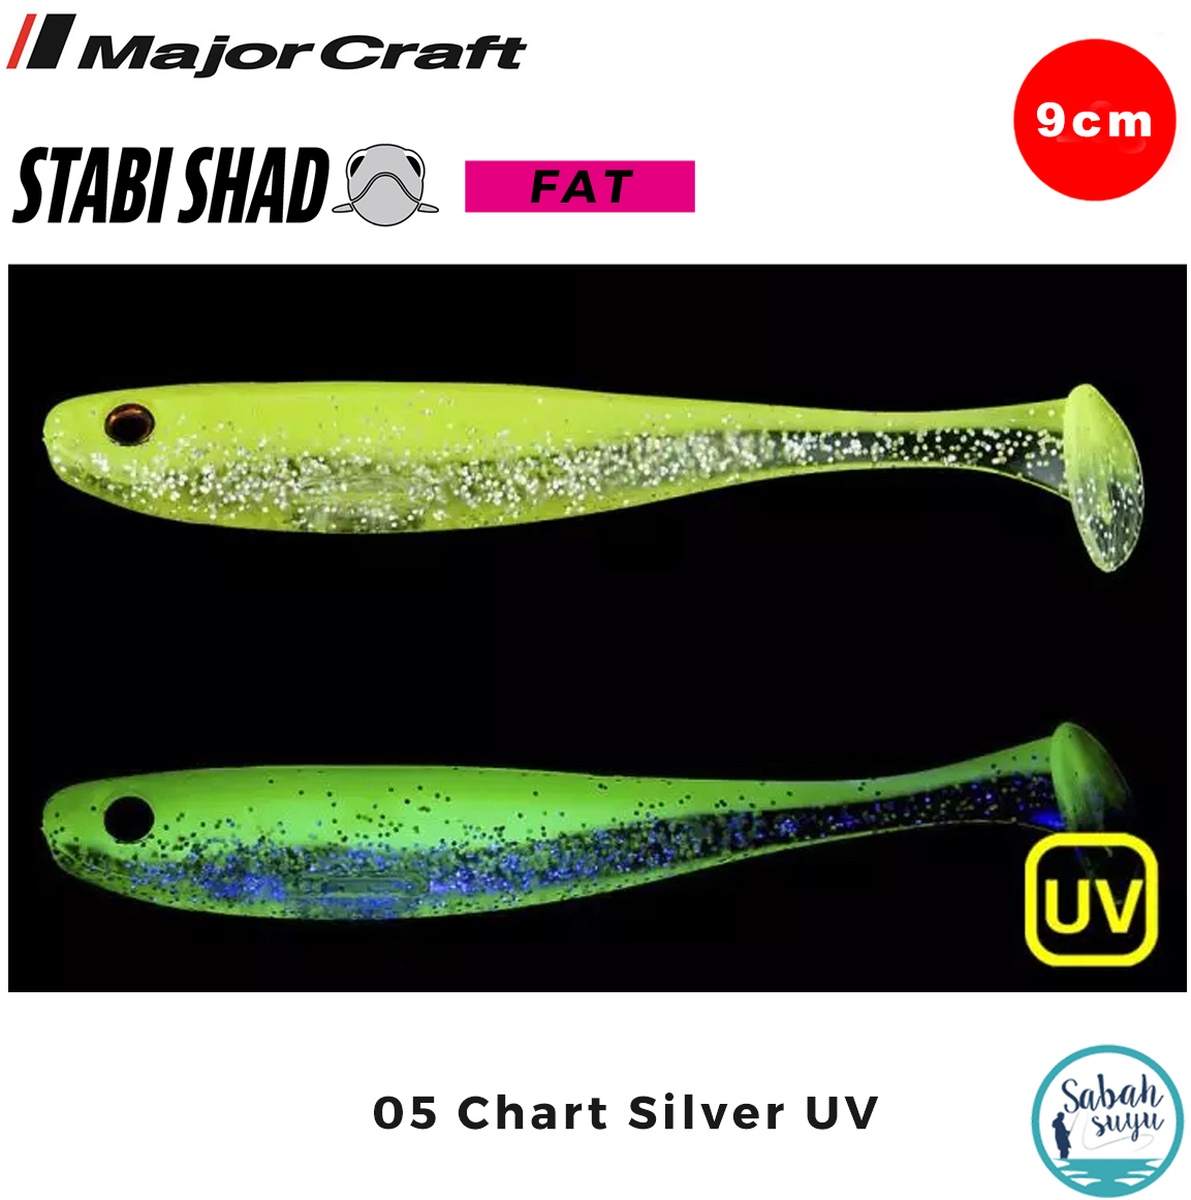 Major Craft Stabi Shad Slim 9cm Silikon Balık #05 Chart Silver UV